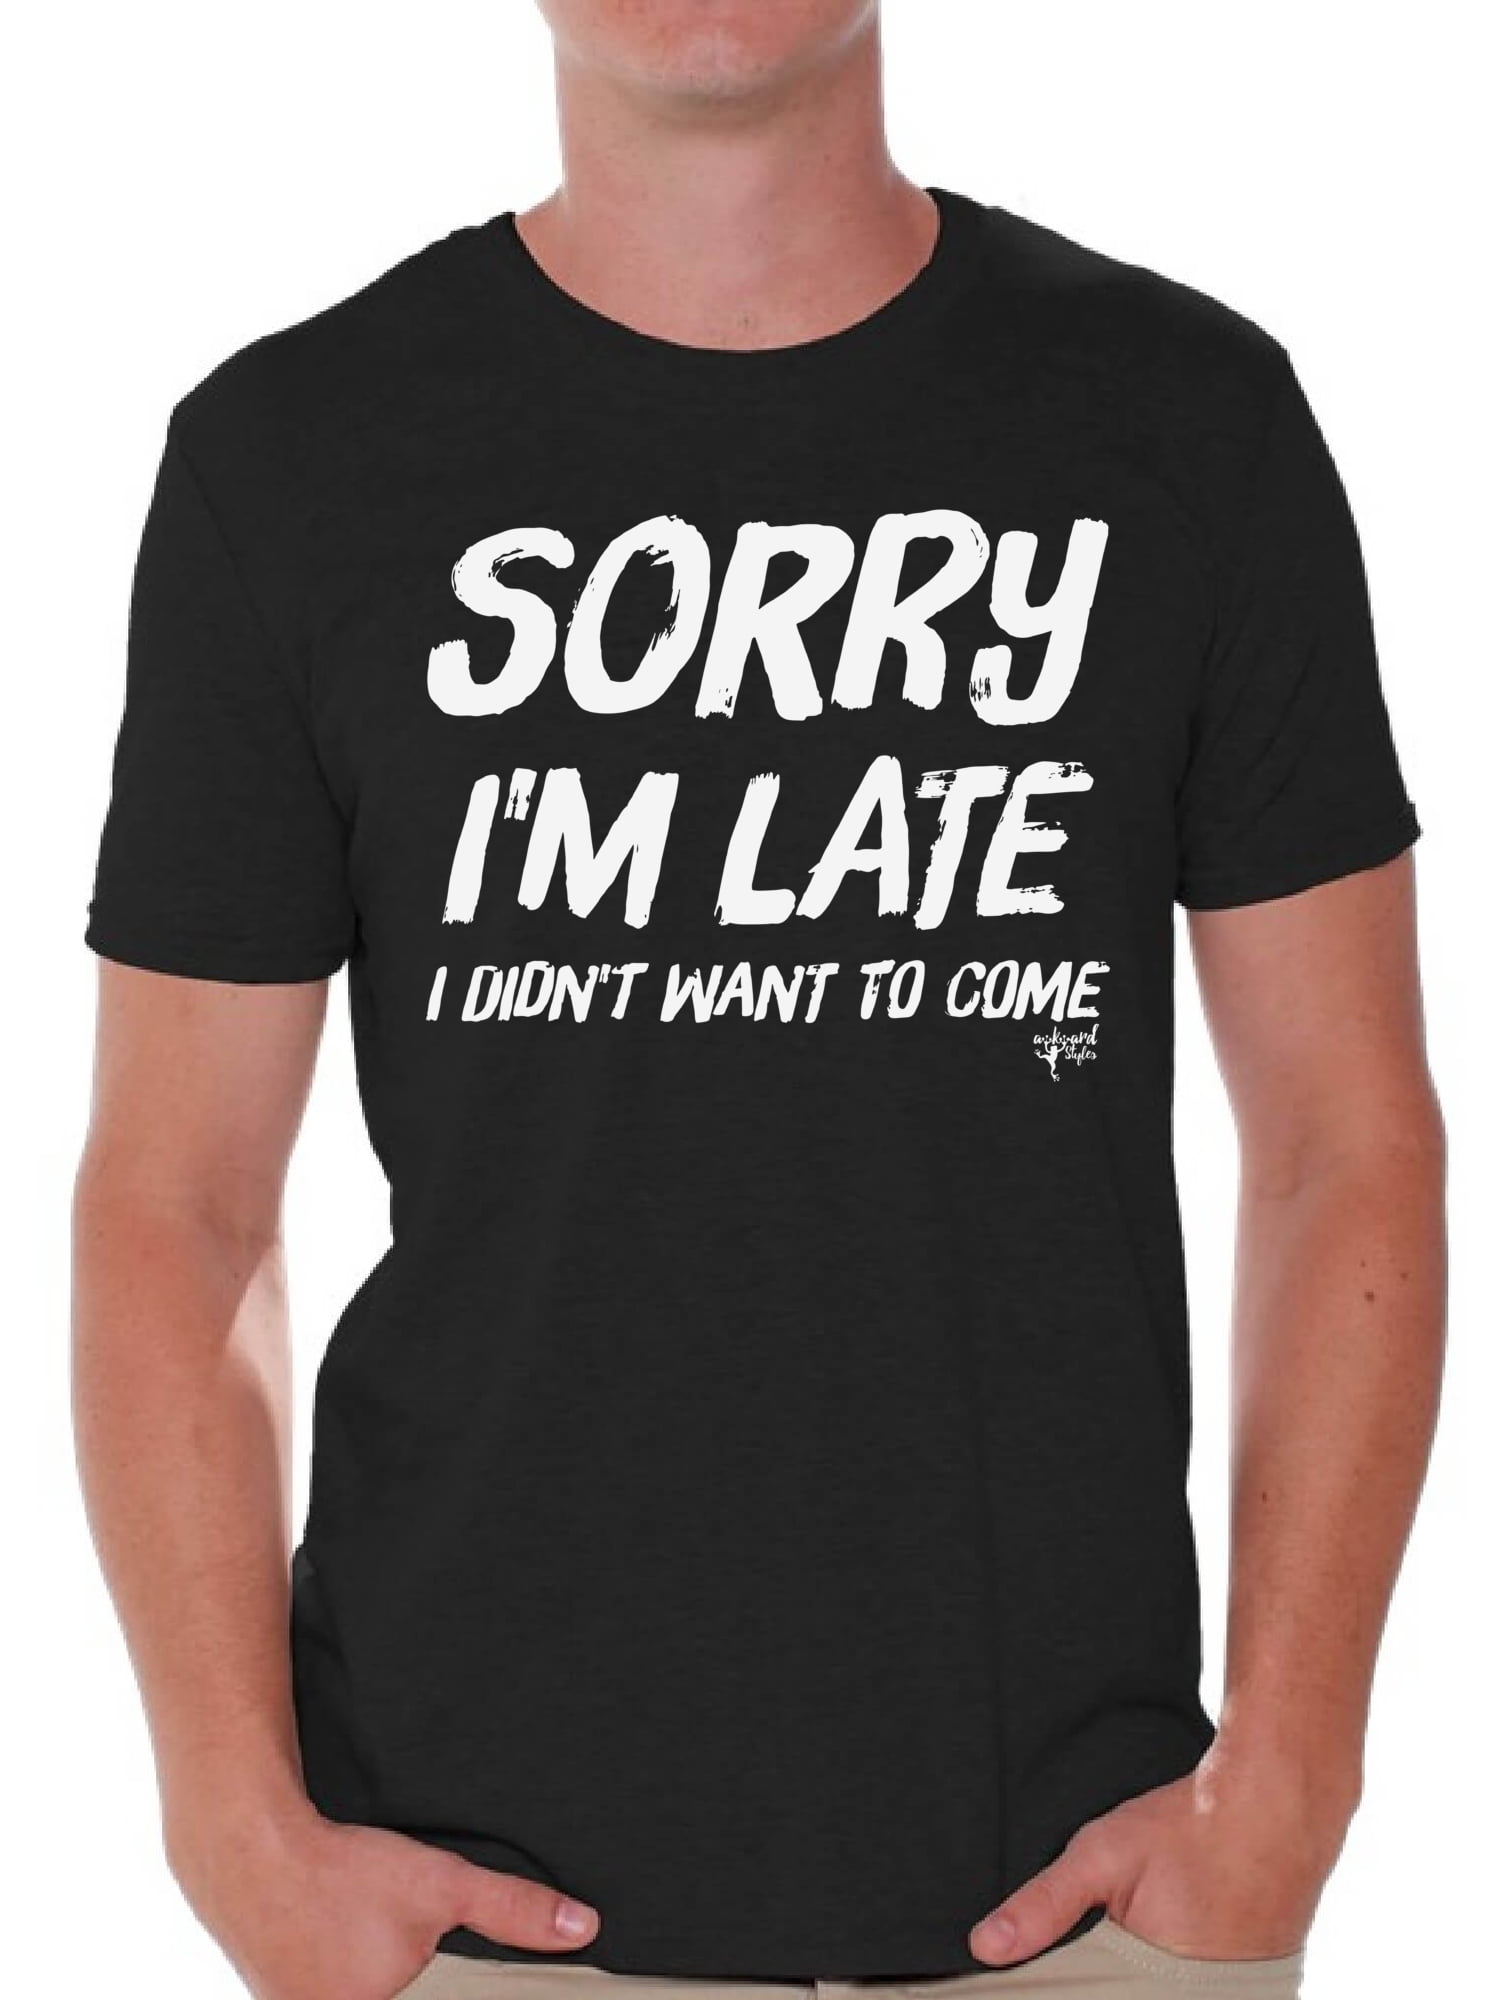 Awkward Styles Men's Humor Shirts Mens Humor Graphic Tees I'm Late Lazy ...